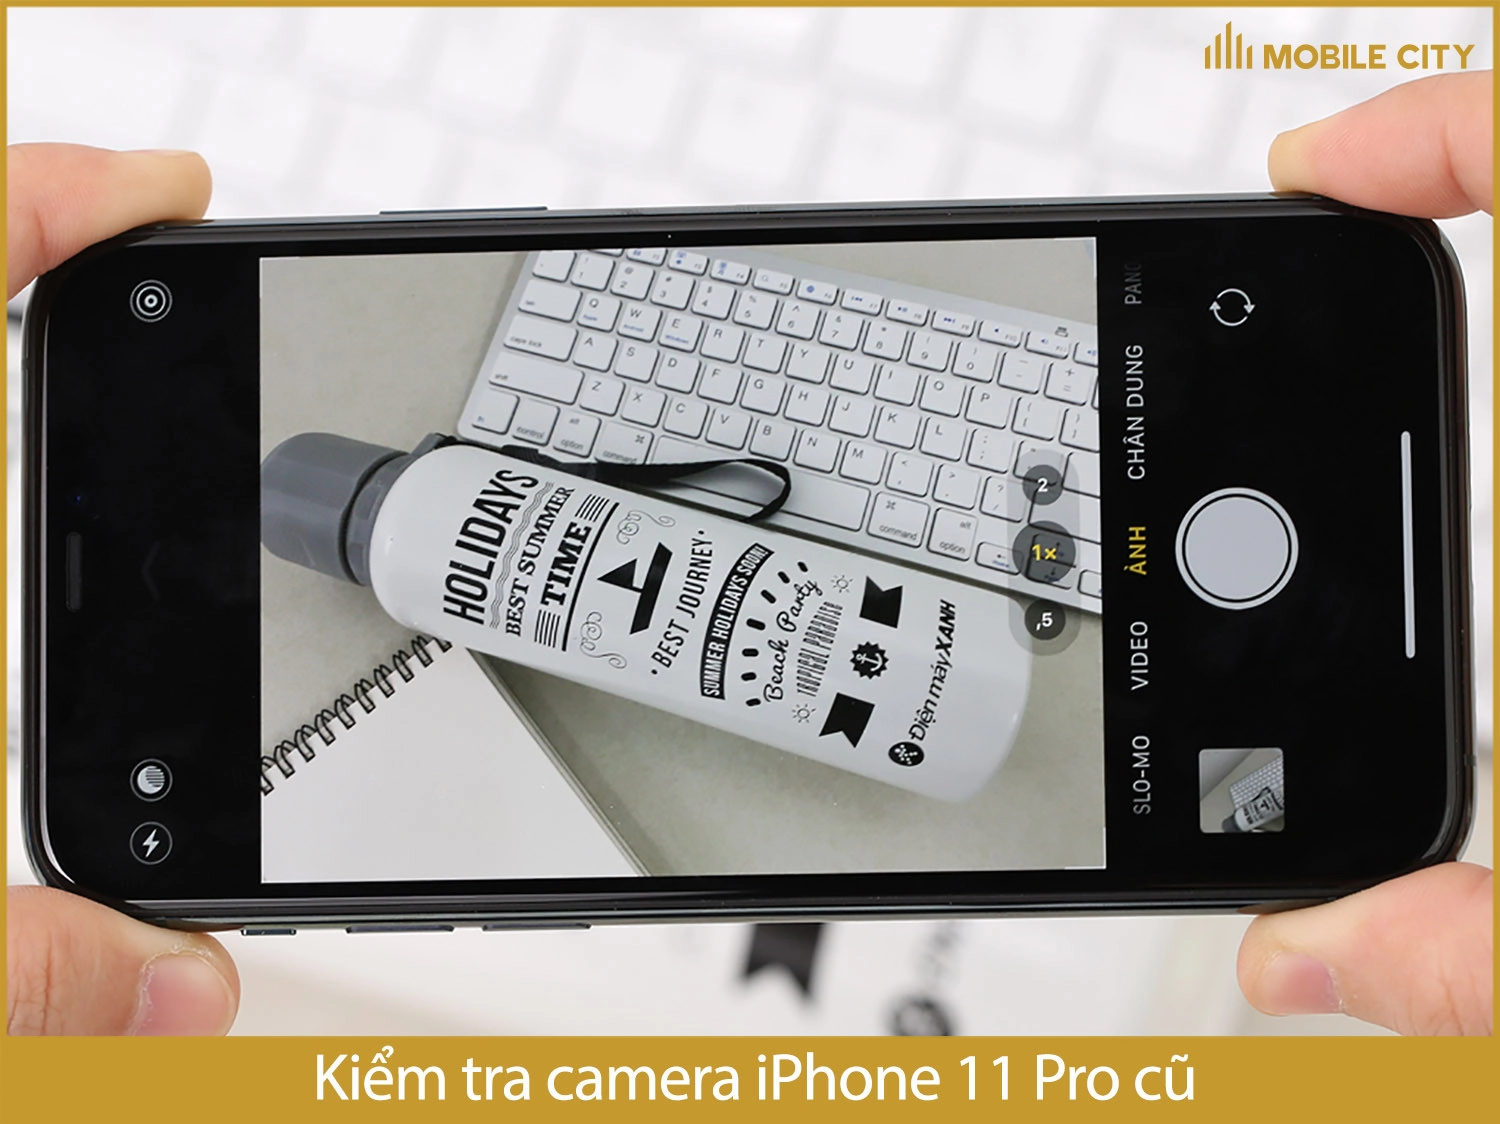 Kiểm tra camera iPhone 11 Pro cũ